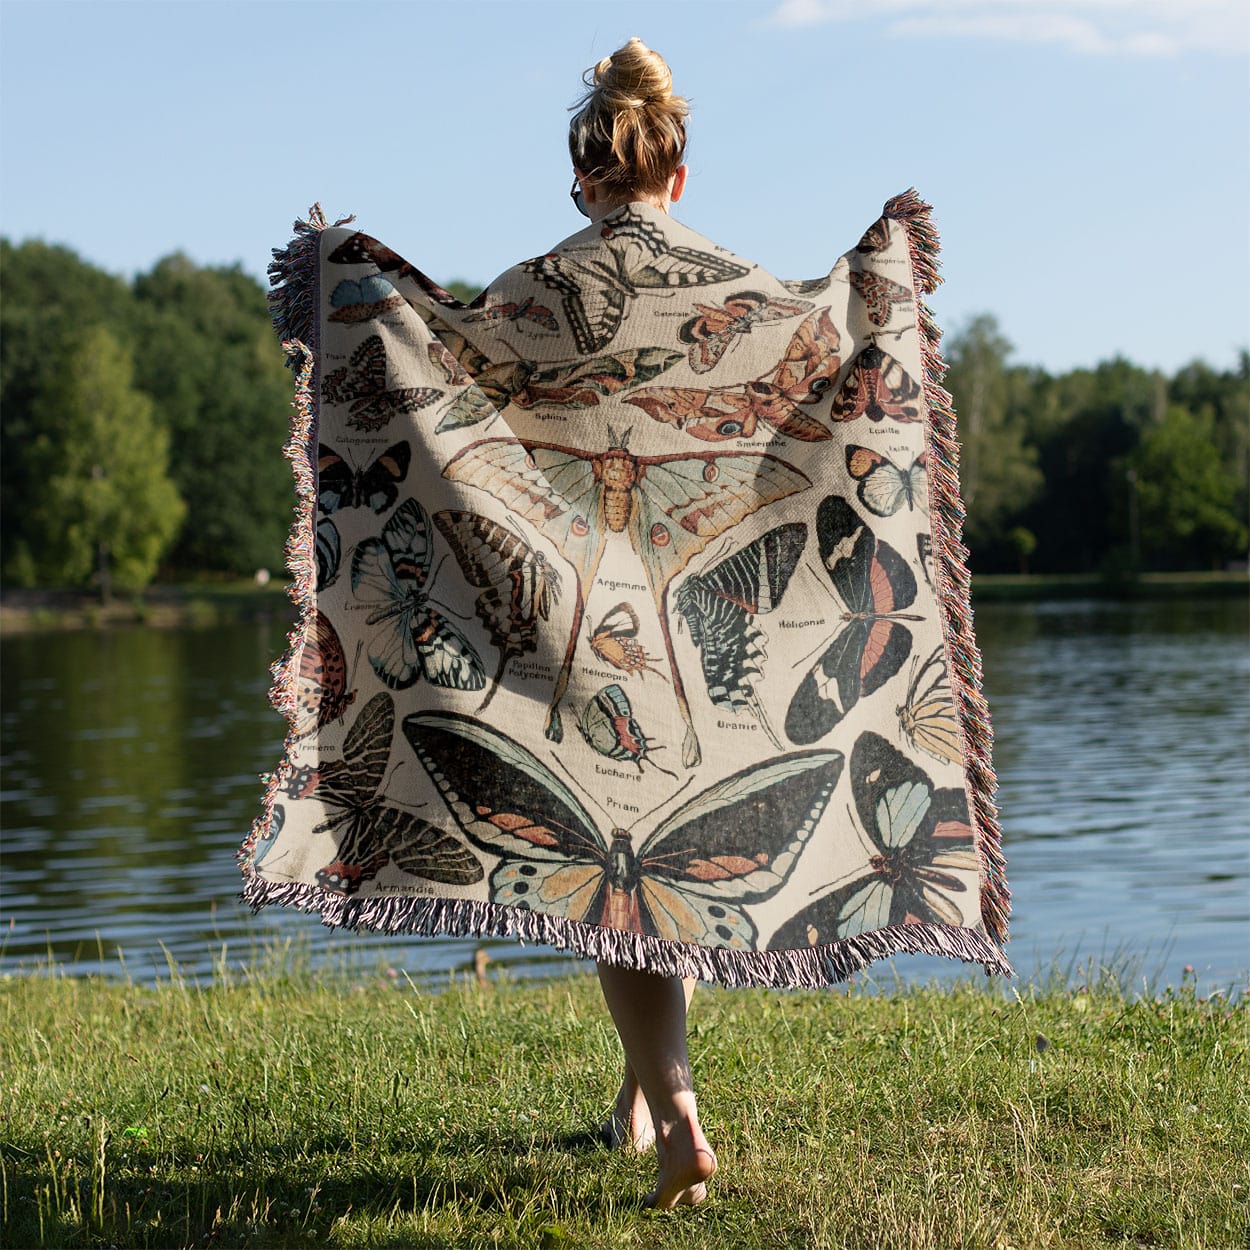 Butterfly Woven Blanket Held on a Woman's Back Outside